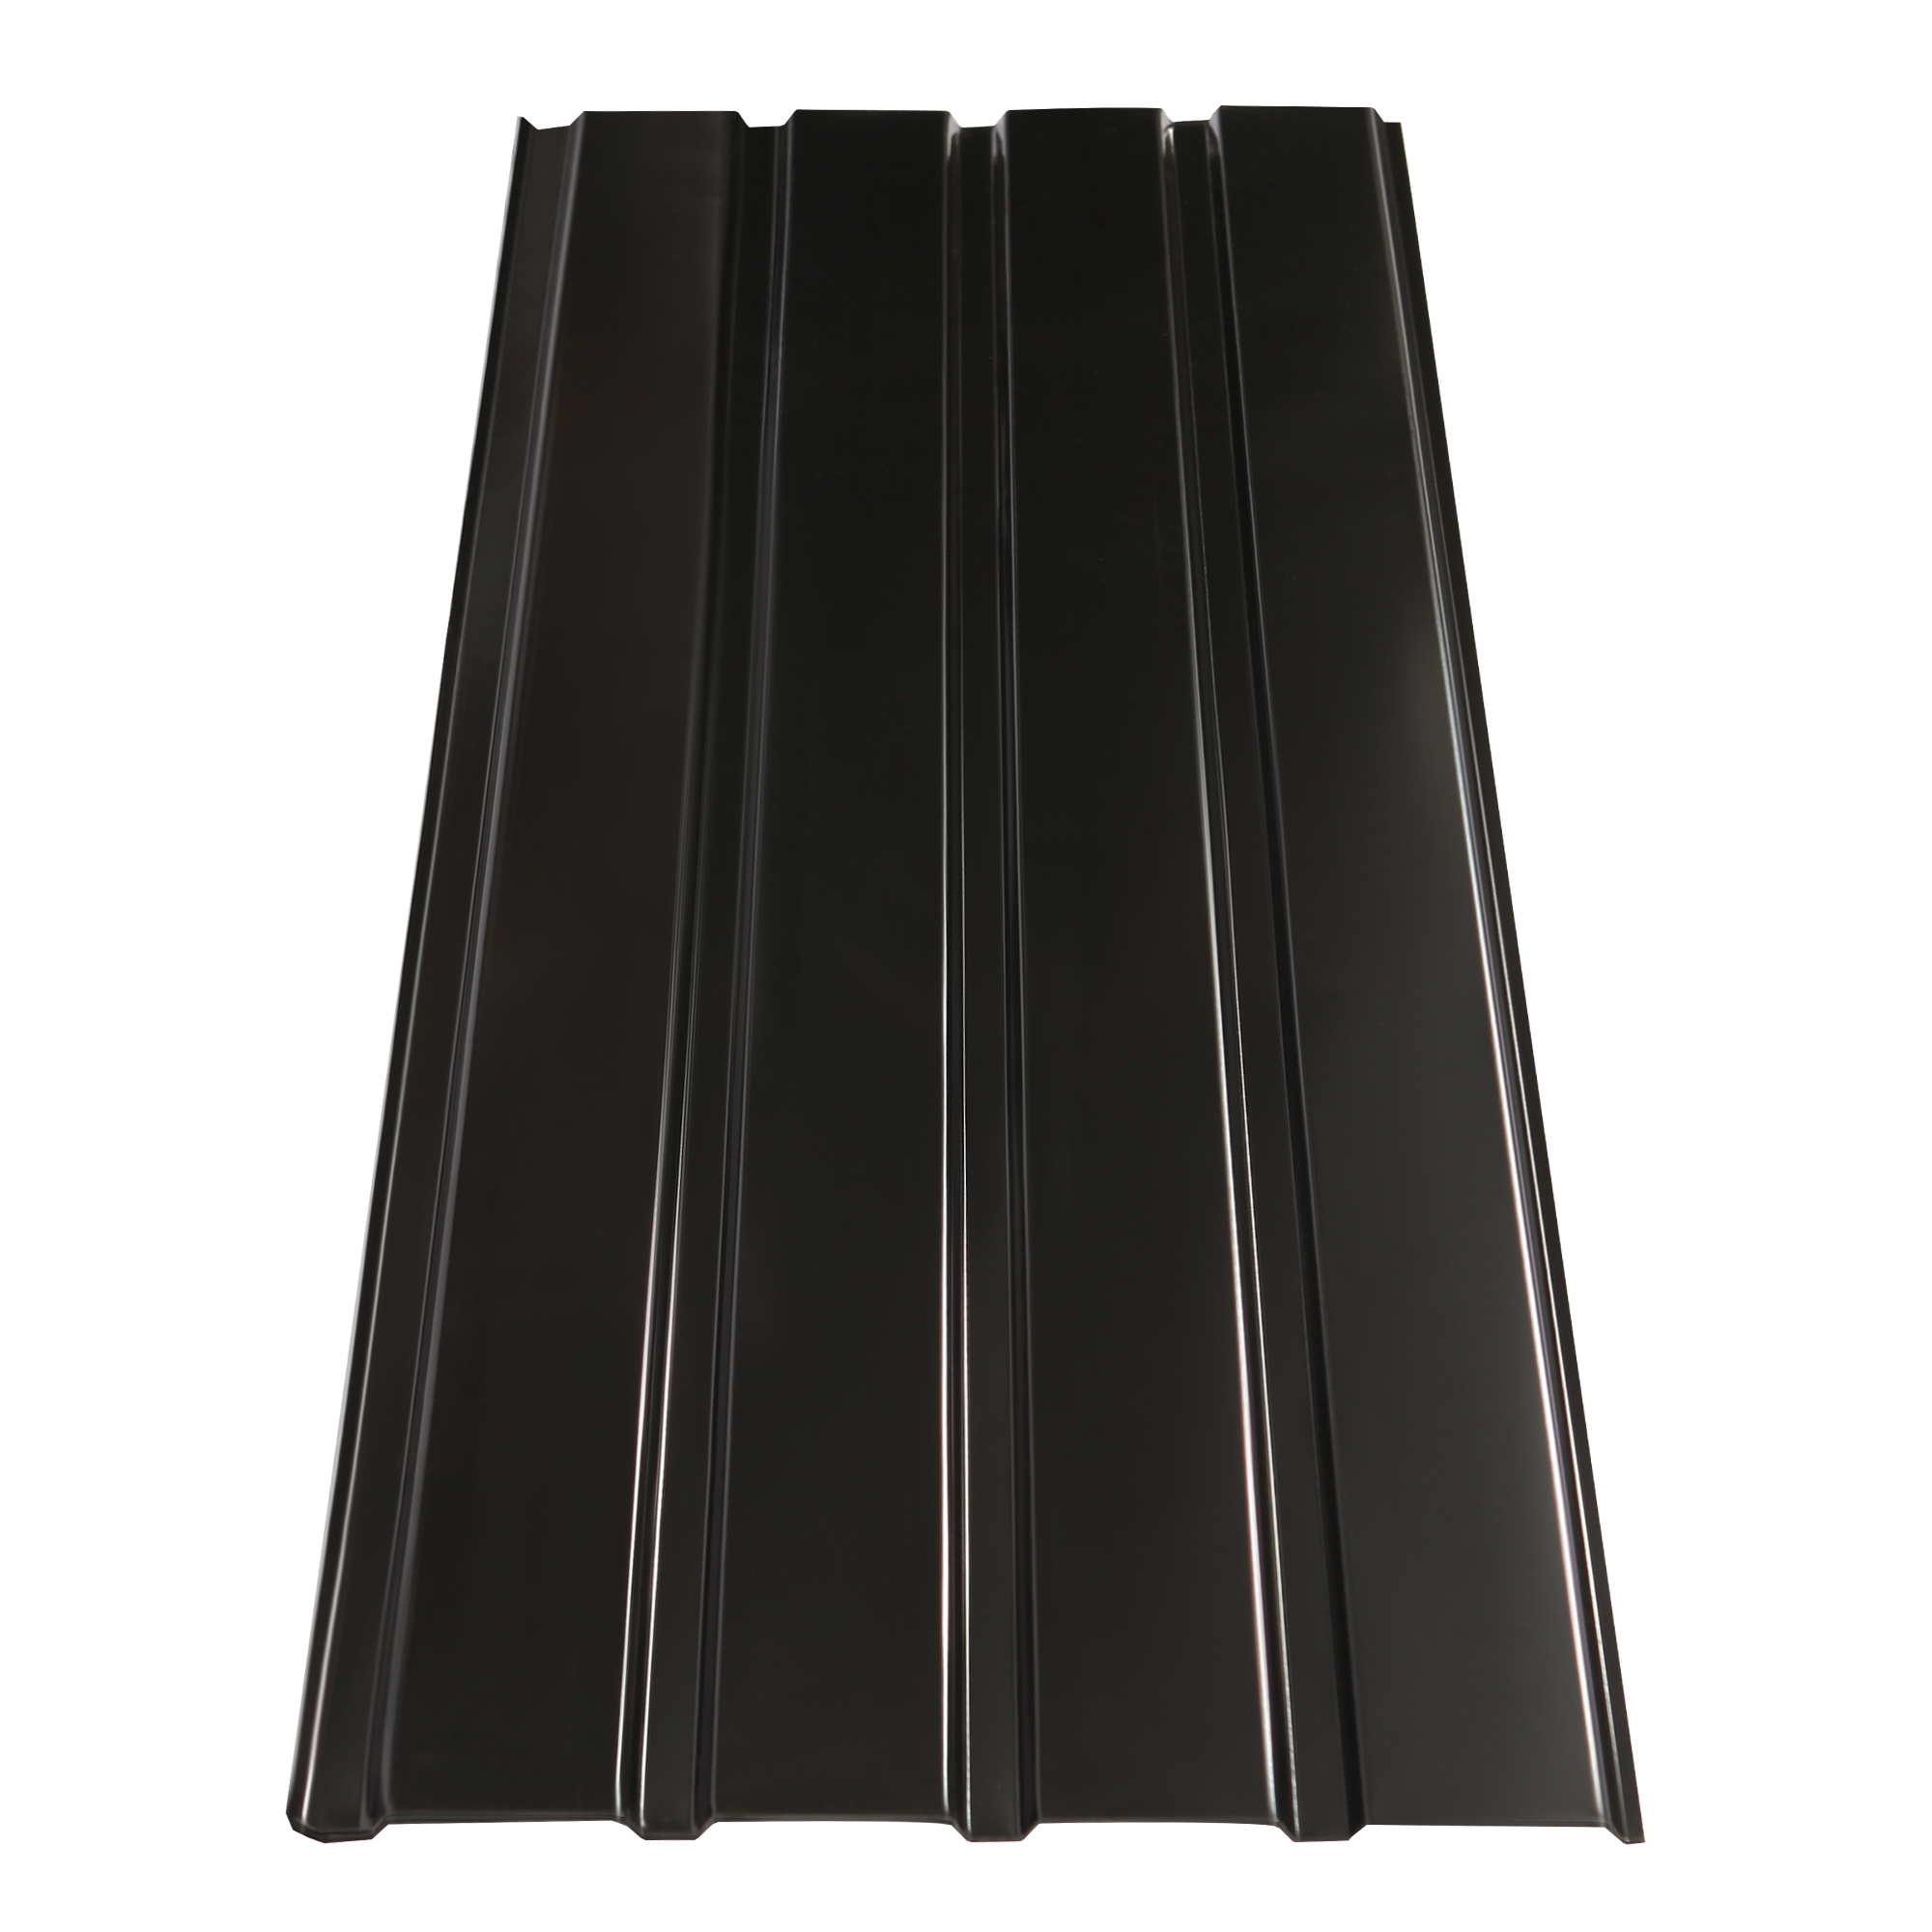 12 Pcs Roof Sheets Corrugated Profile Galvanized Metal Roofing Carport Black Ebay